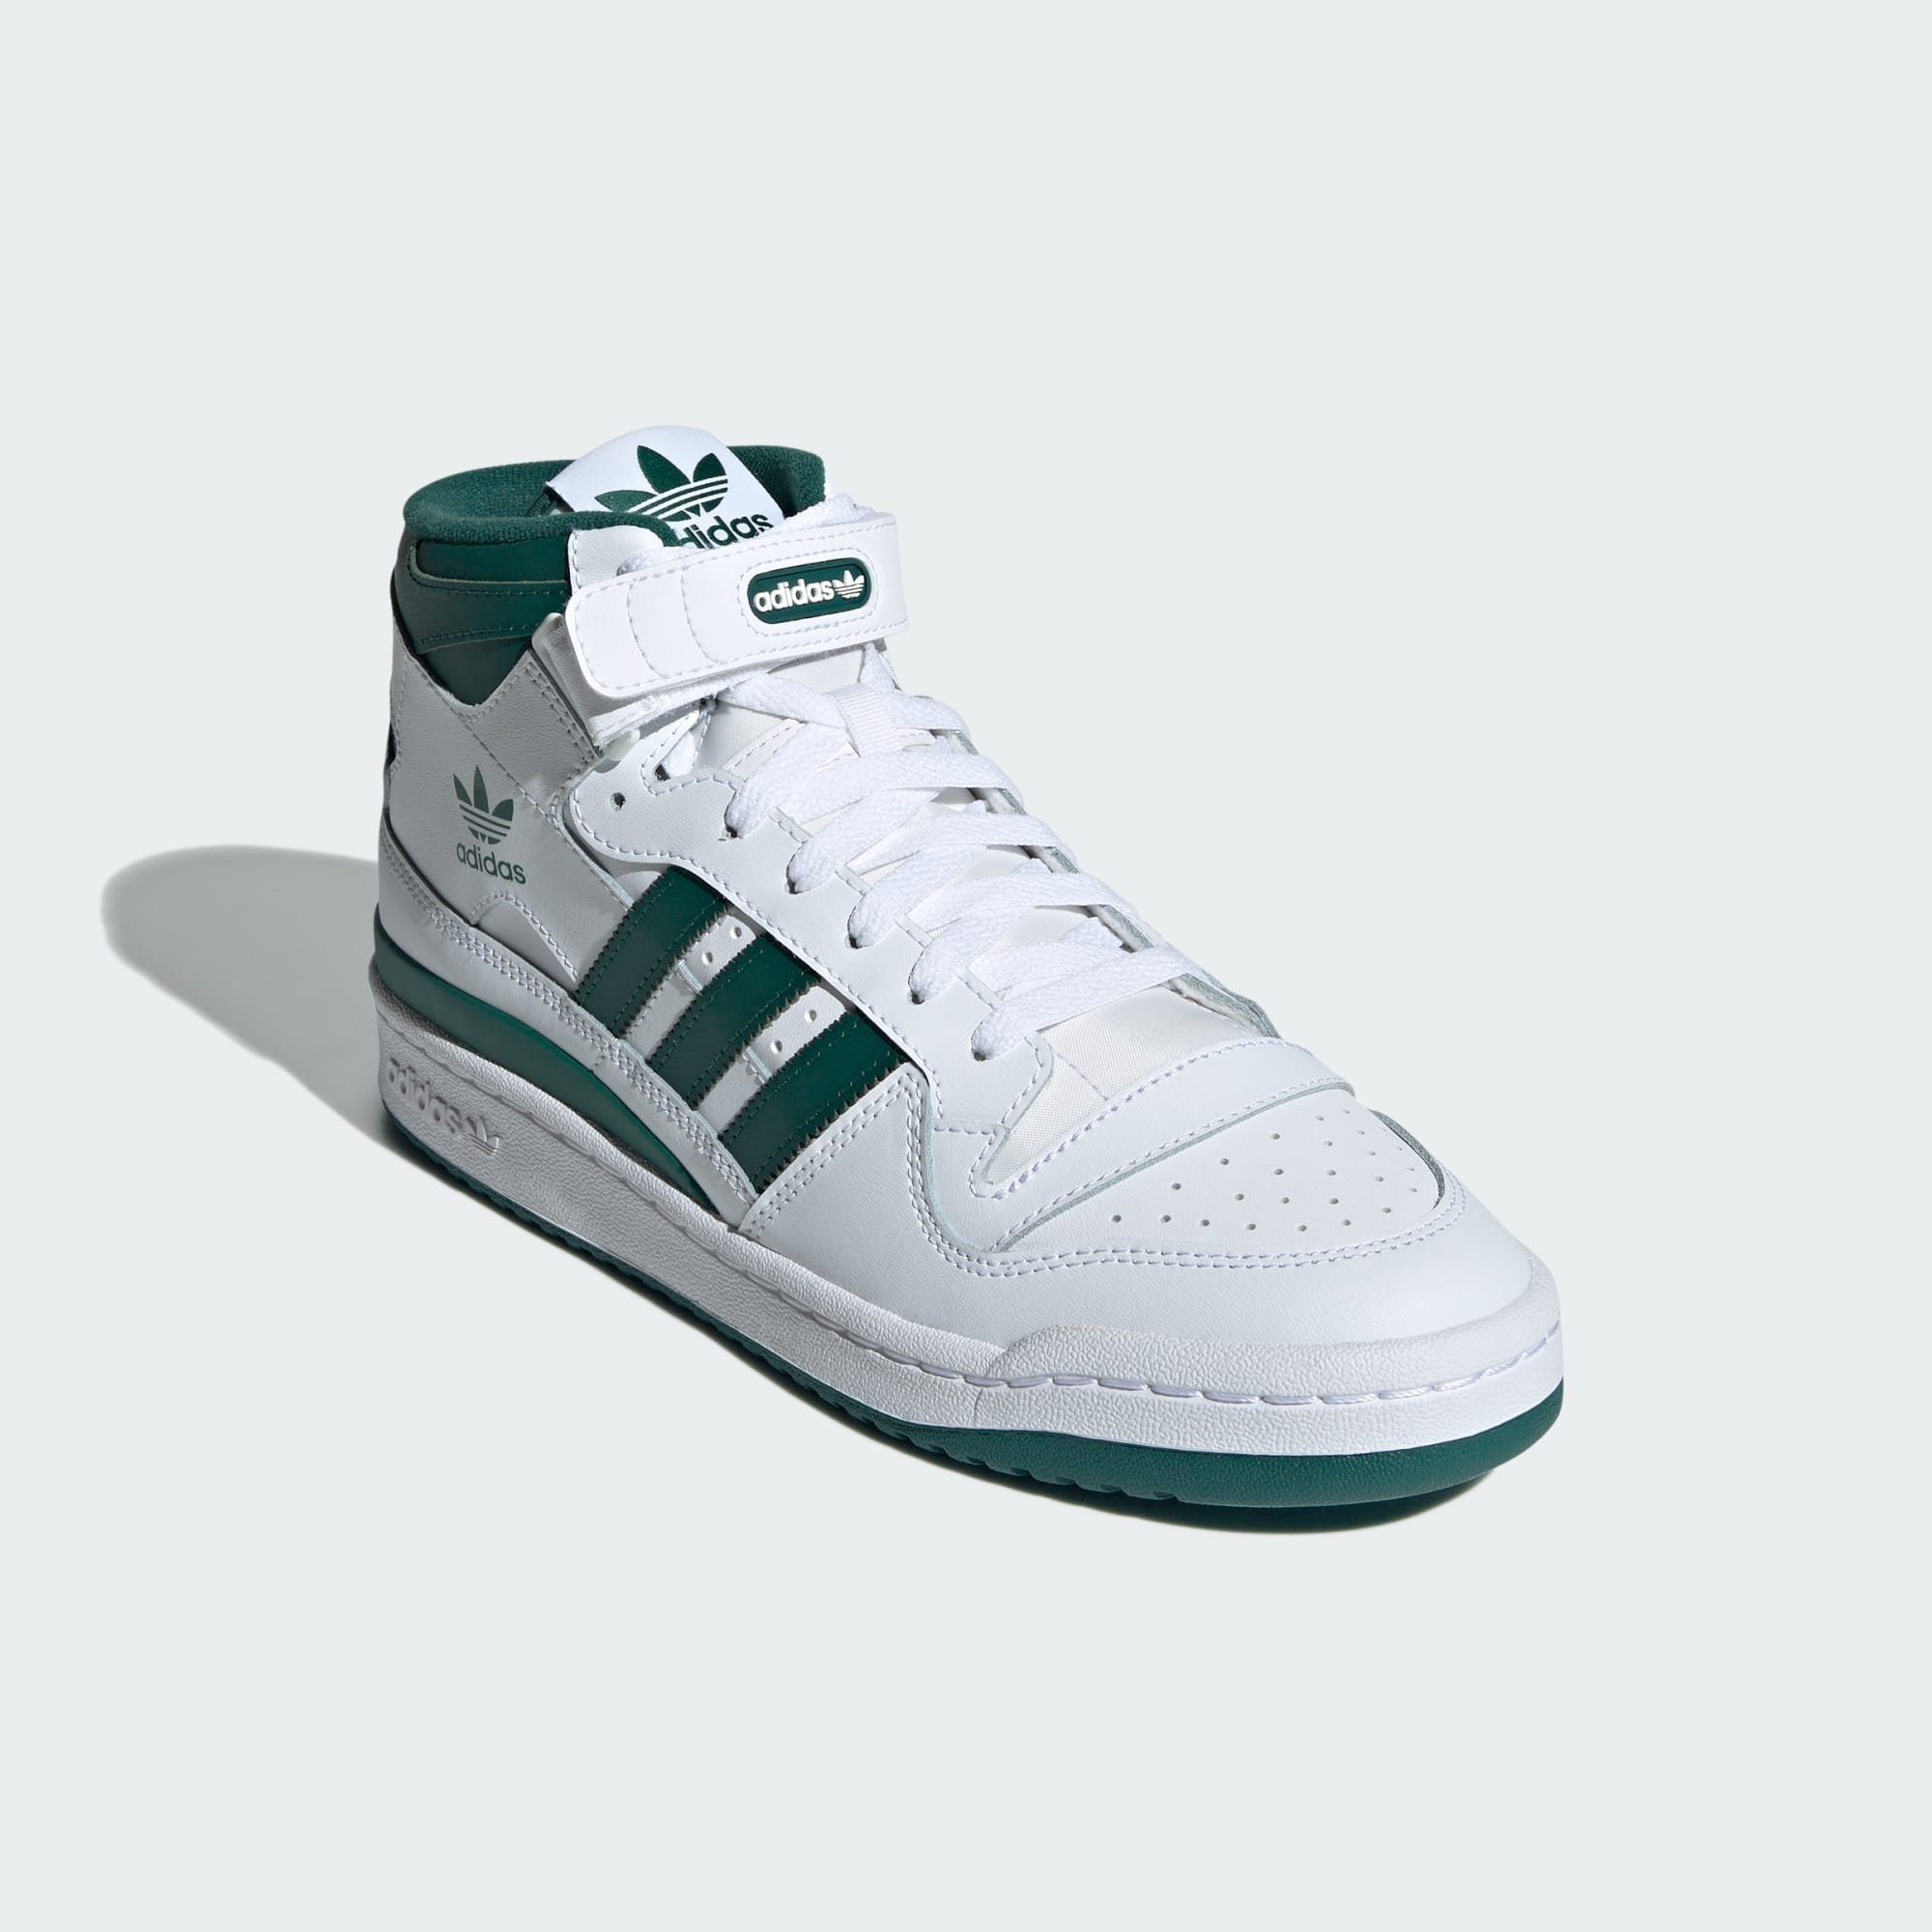 adidas Originals FORUM MID SHOES Sneaker Cloud White / Collegiate Green / Cloud White